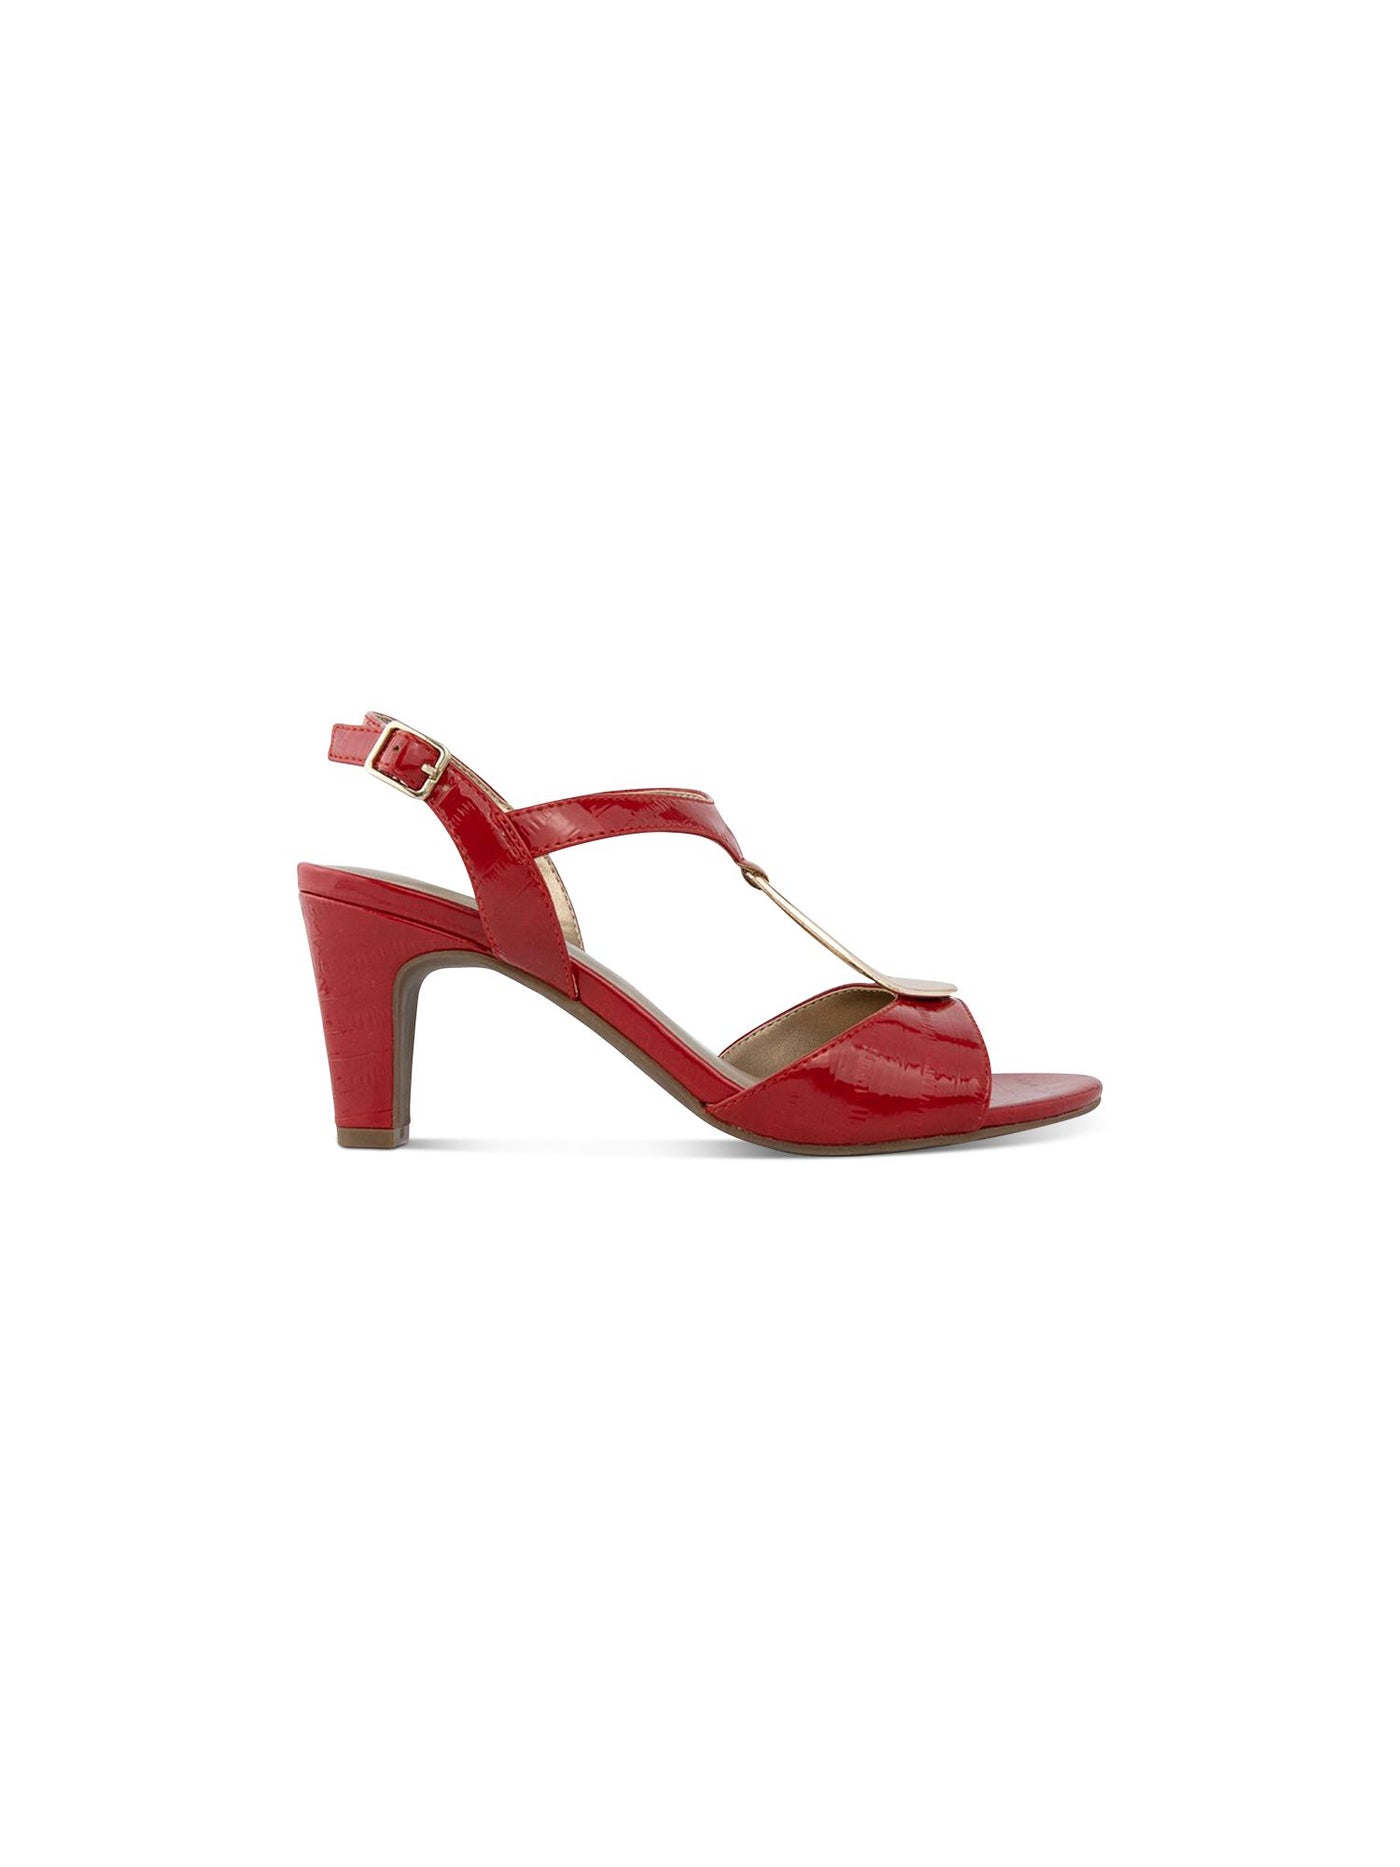 KAREN SCOTT Womens Red Snake Embossed Hardware Detai Adjustable Strap Cushioned Danee Almond Toe Block Heel Buckle Dress Sandals Shoes 5.5 M